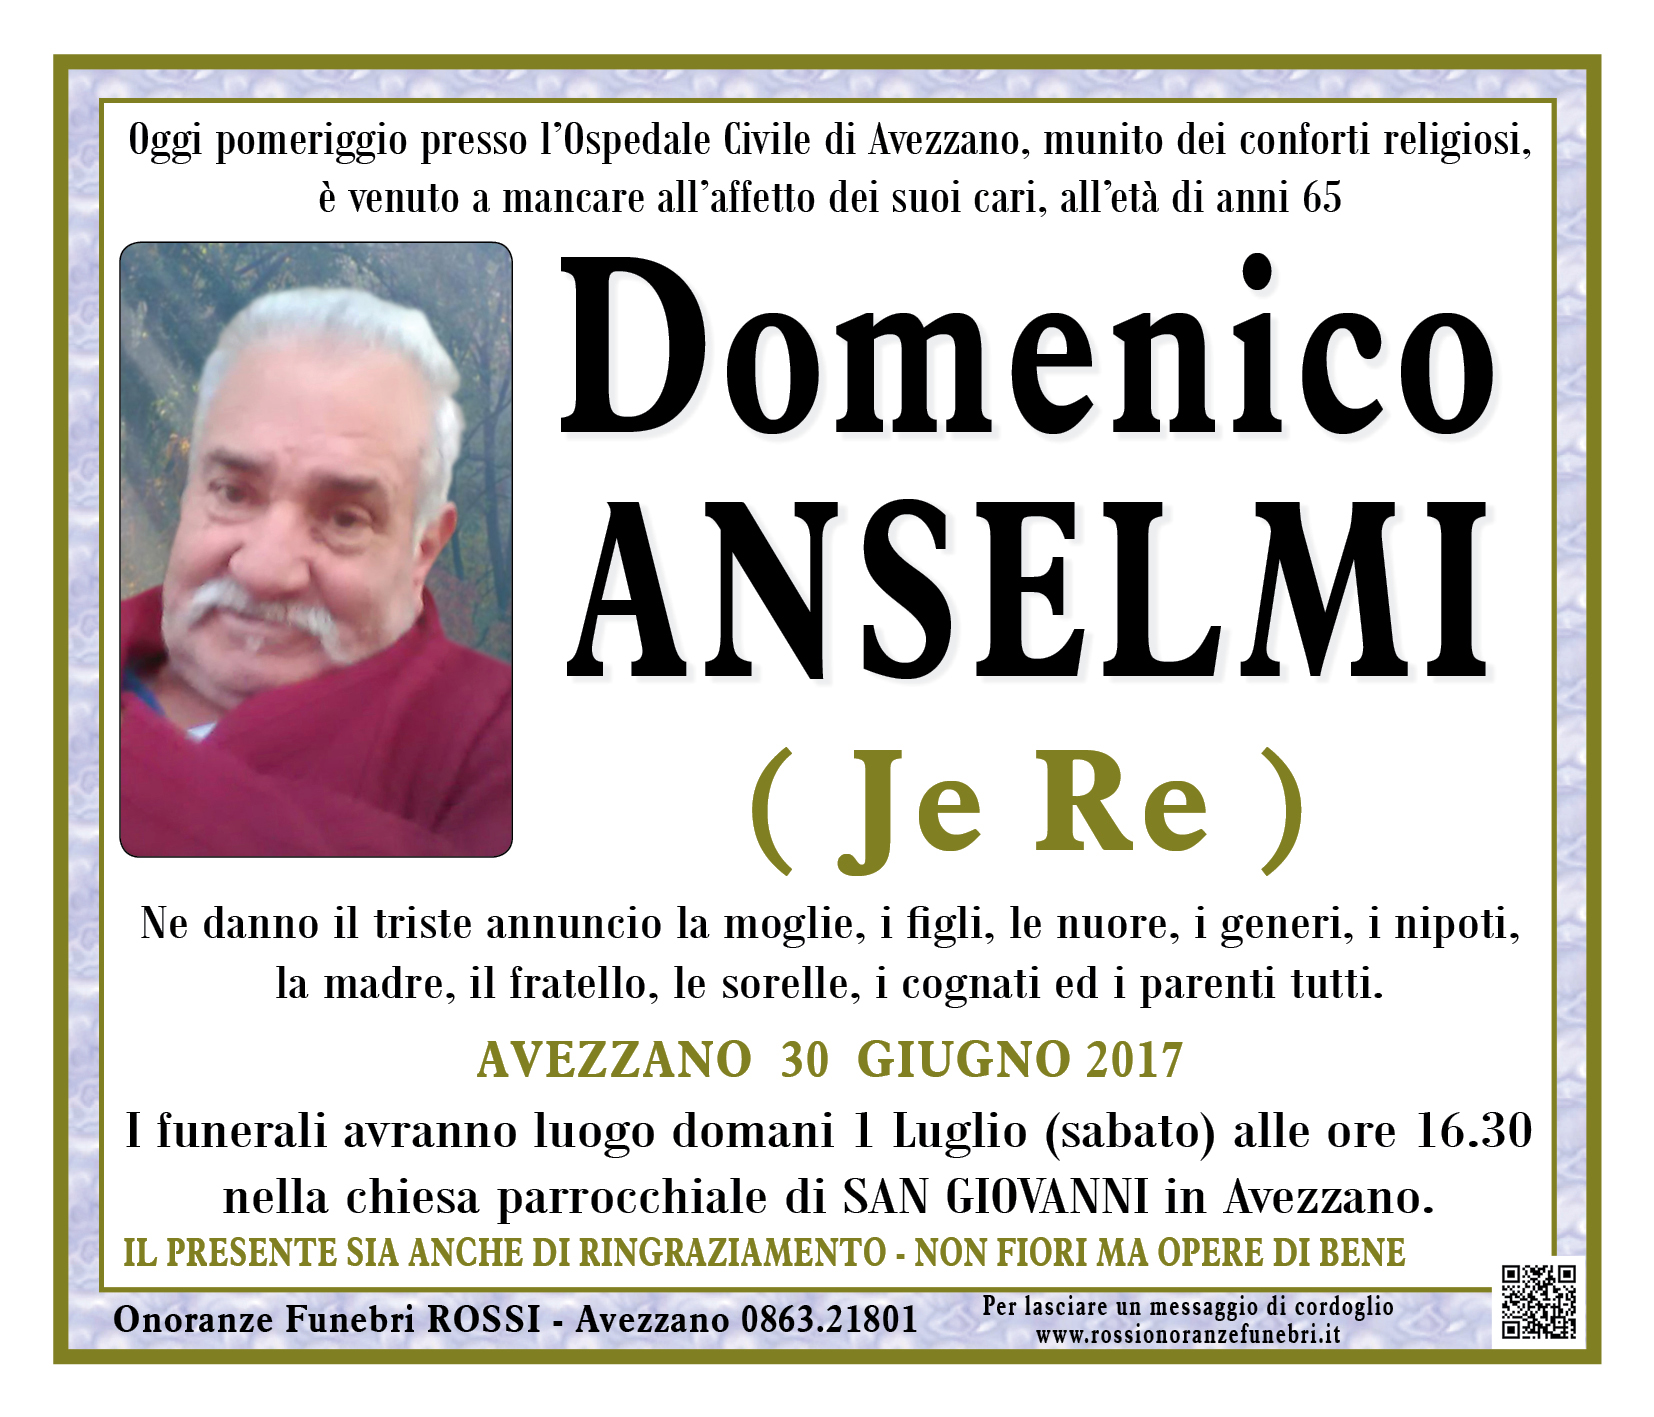 Domenico Anselmi